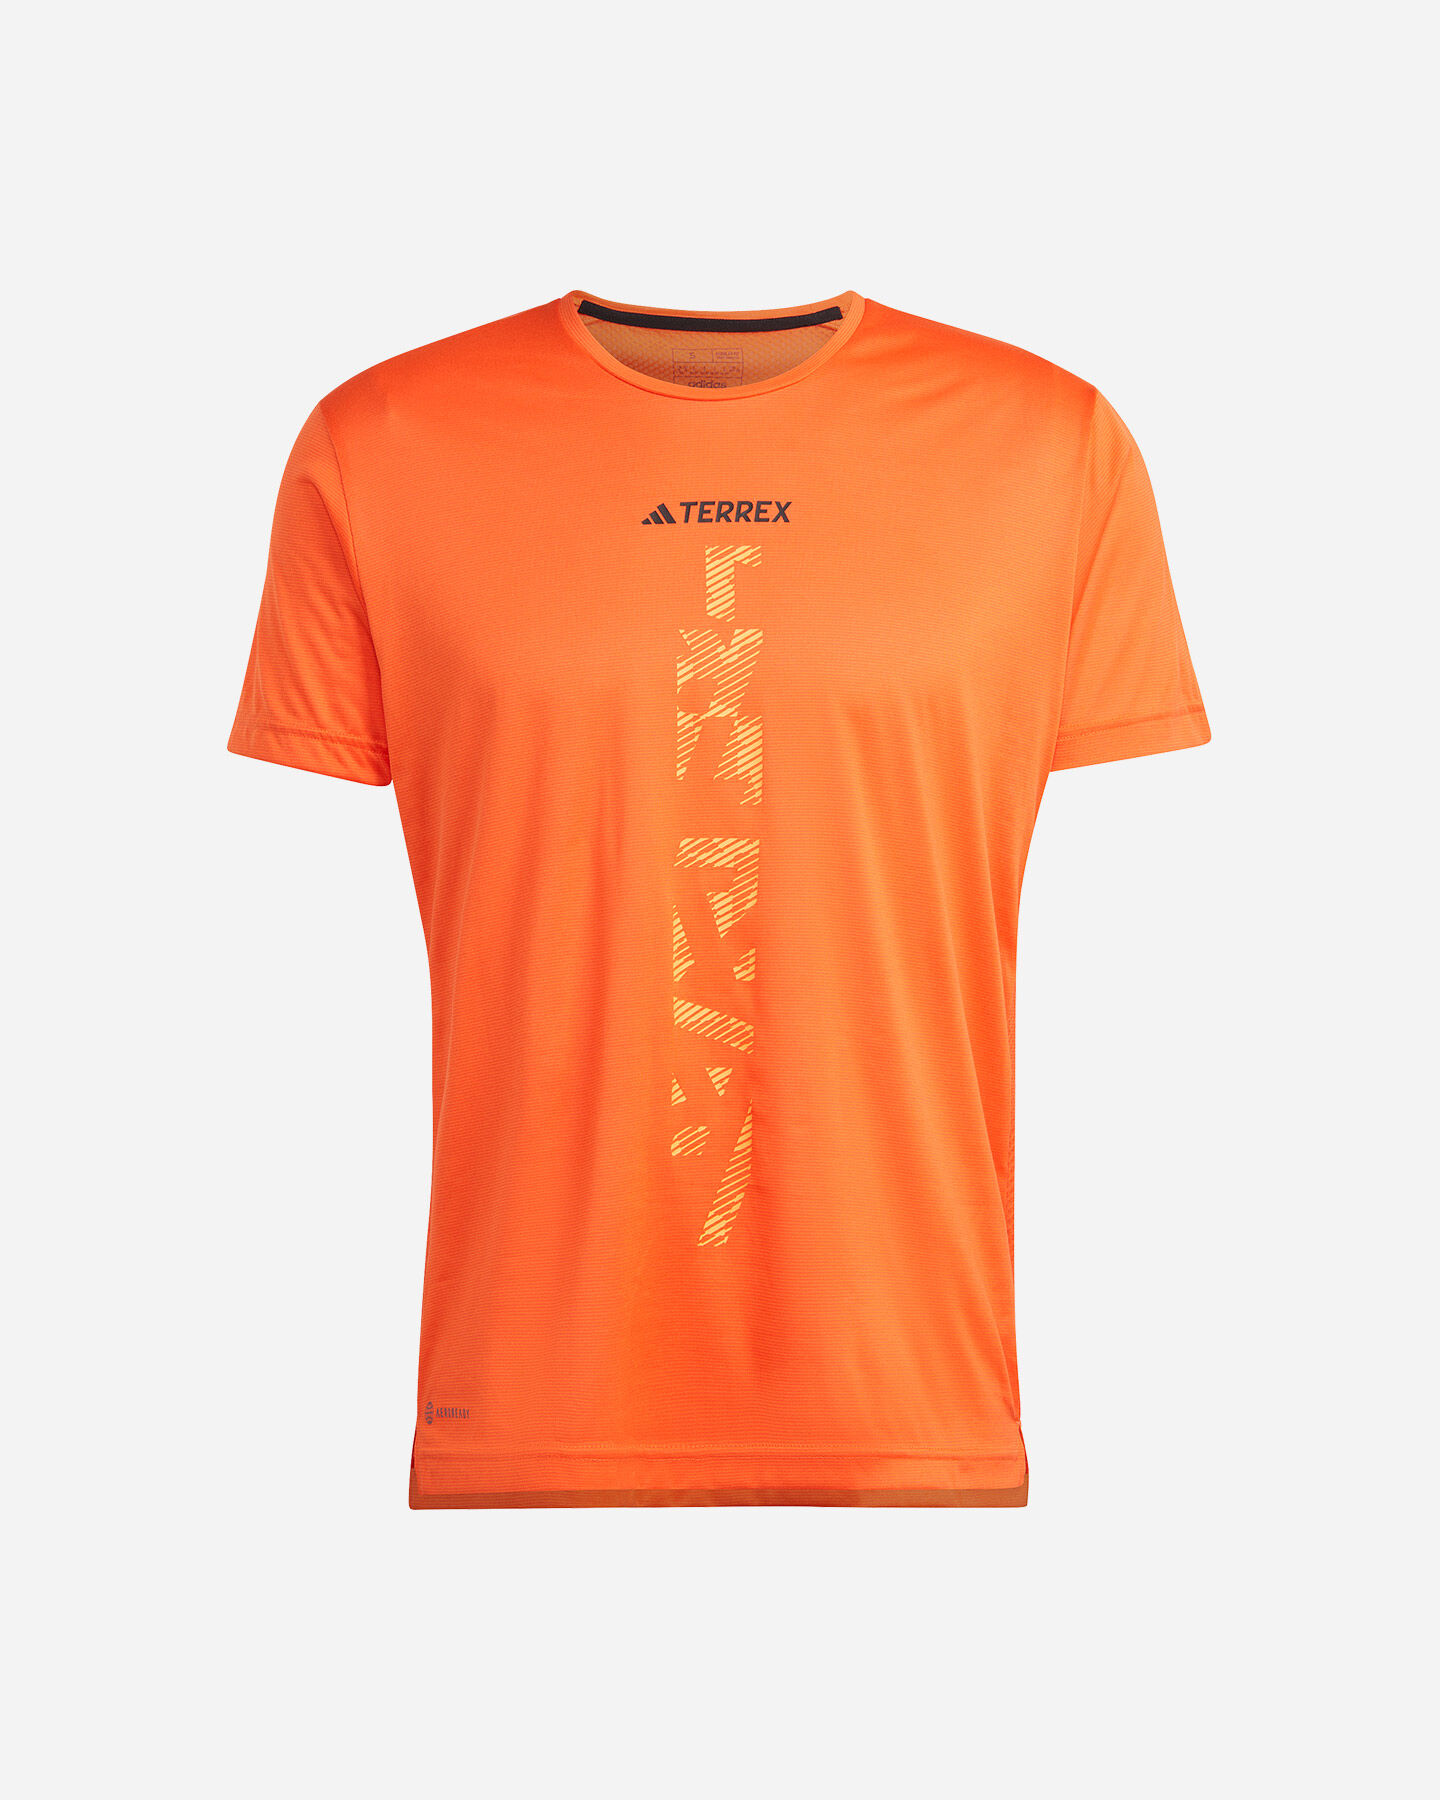  T-Shirt running ADIDAS AGR TERREX M S5545459|UNI|XS scatto 0